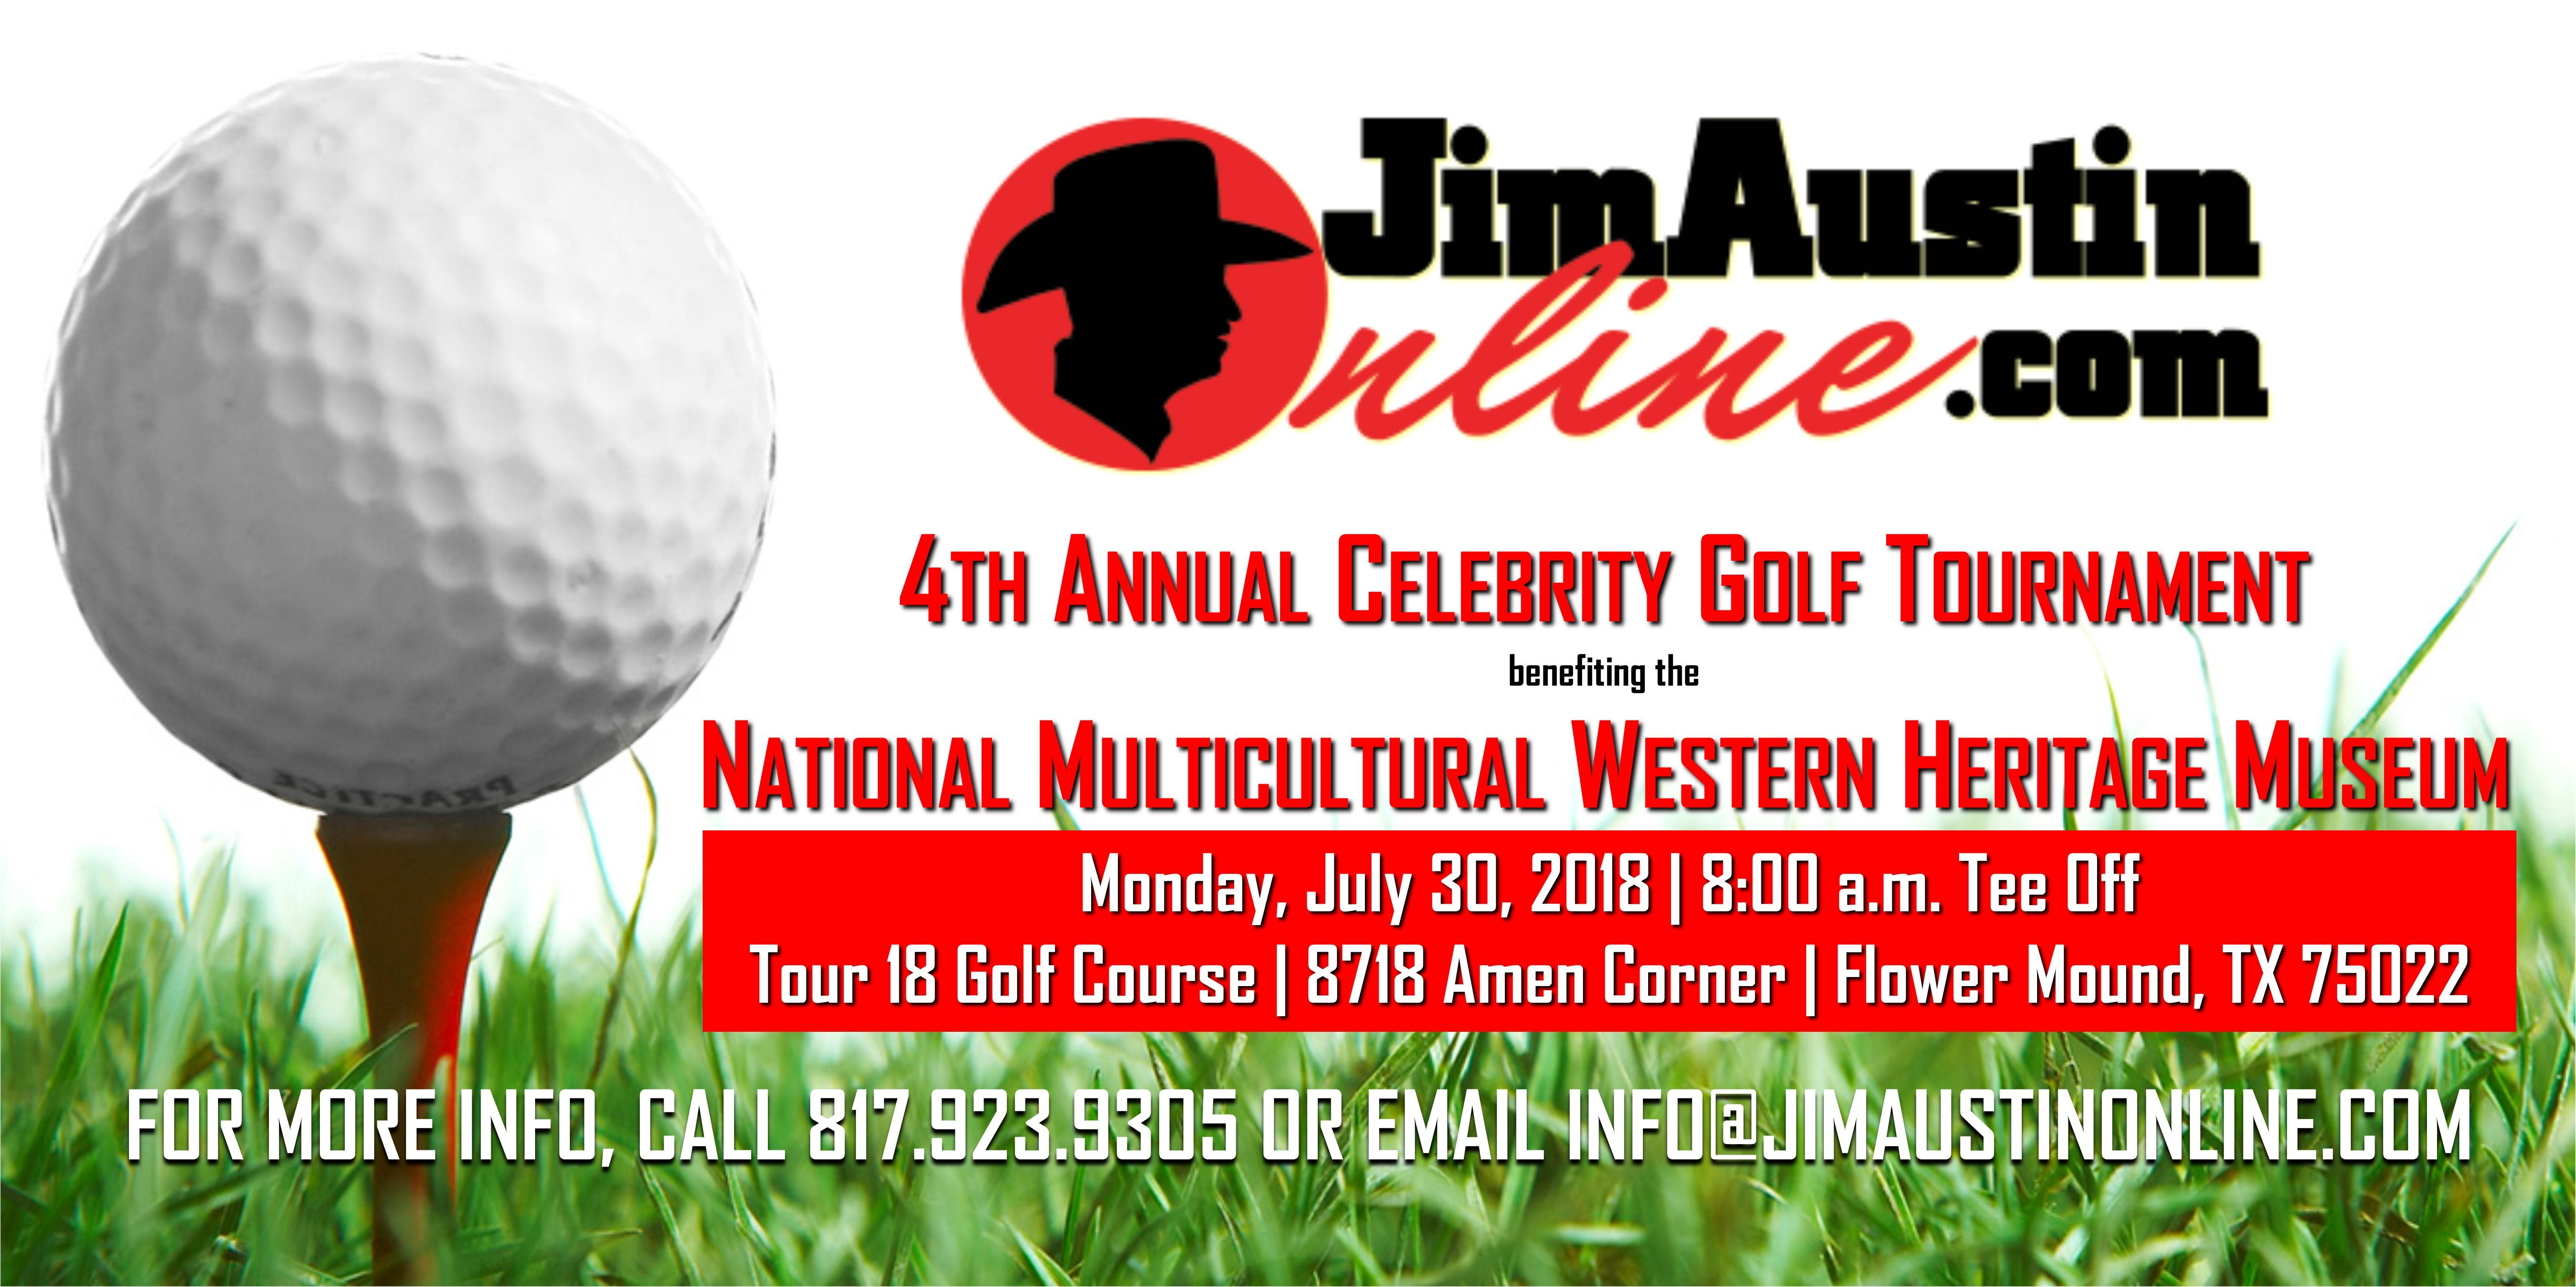 JimAustinOnline.com 4th Annual Celebrity Golf Tournament